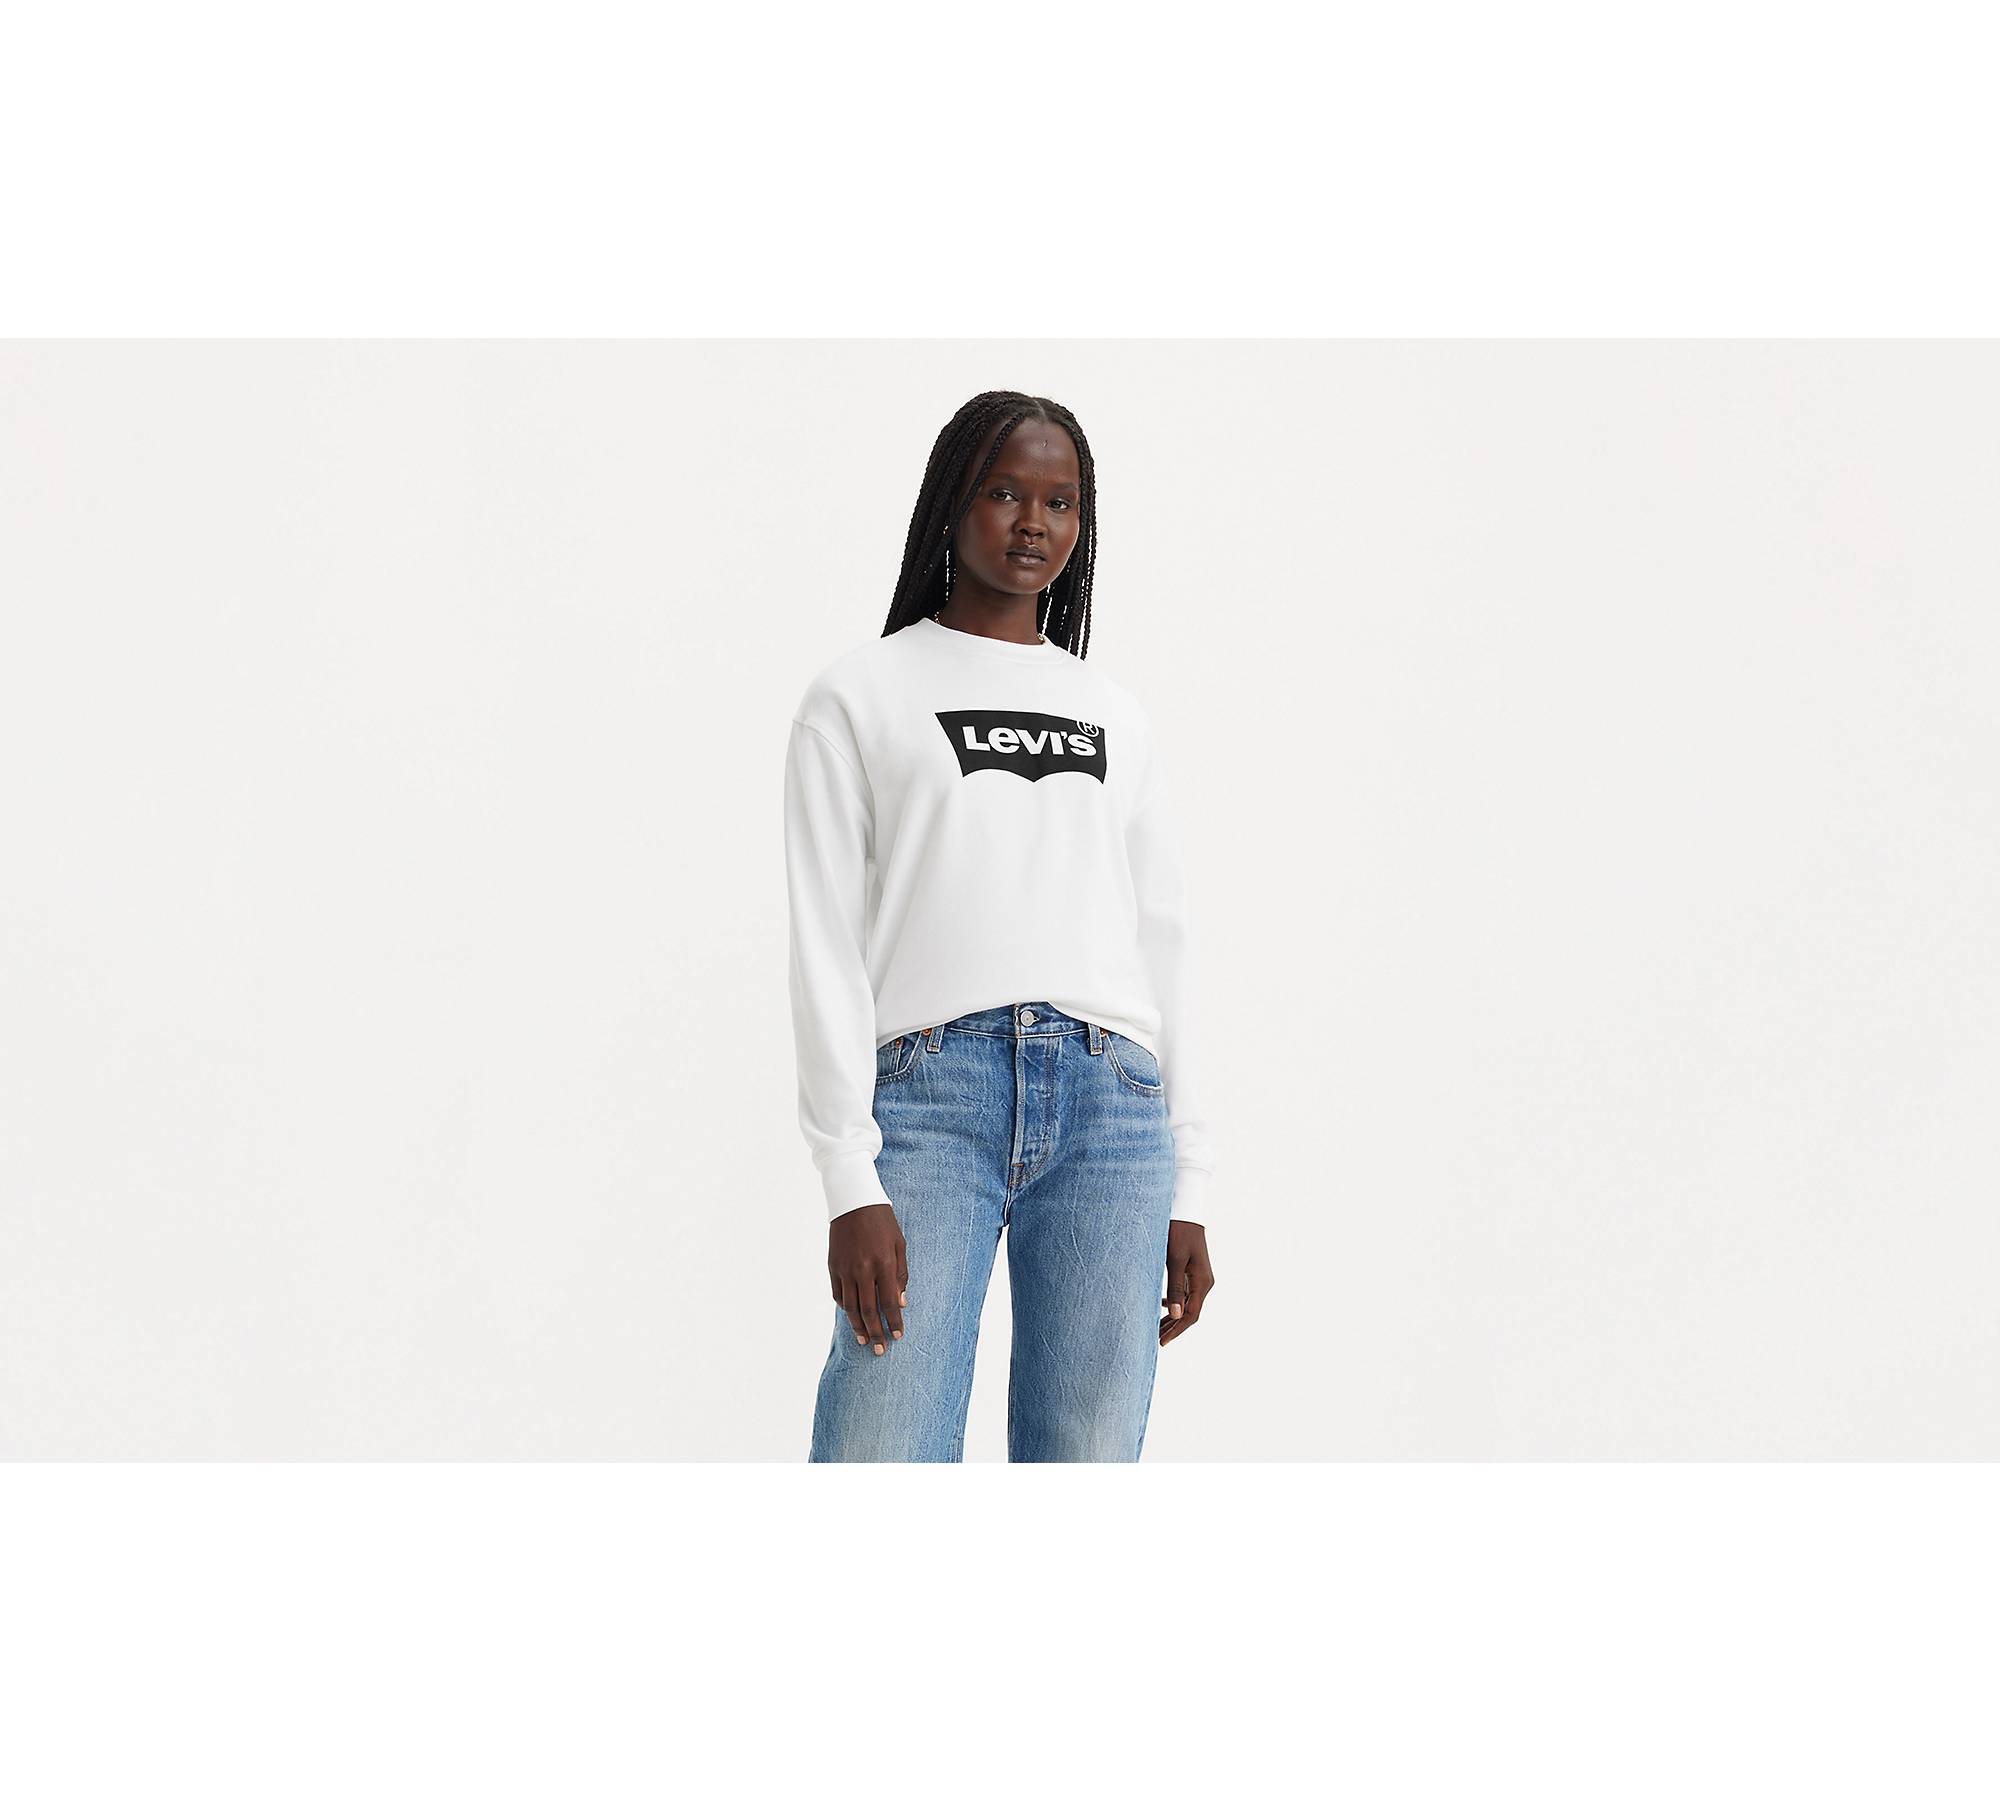 Gaiam Women’s Crewneck White Plush Sweater / Size Medium